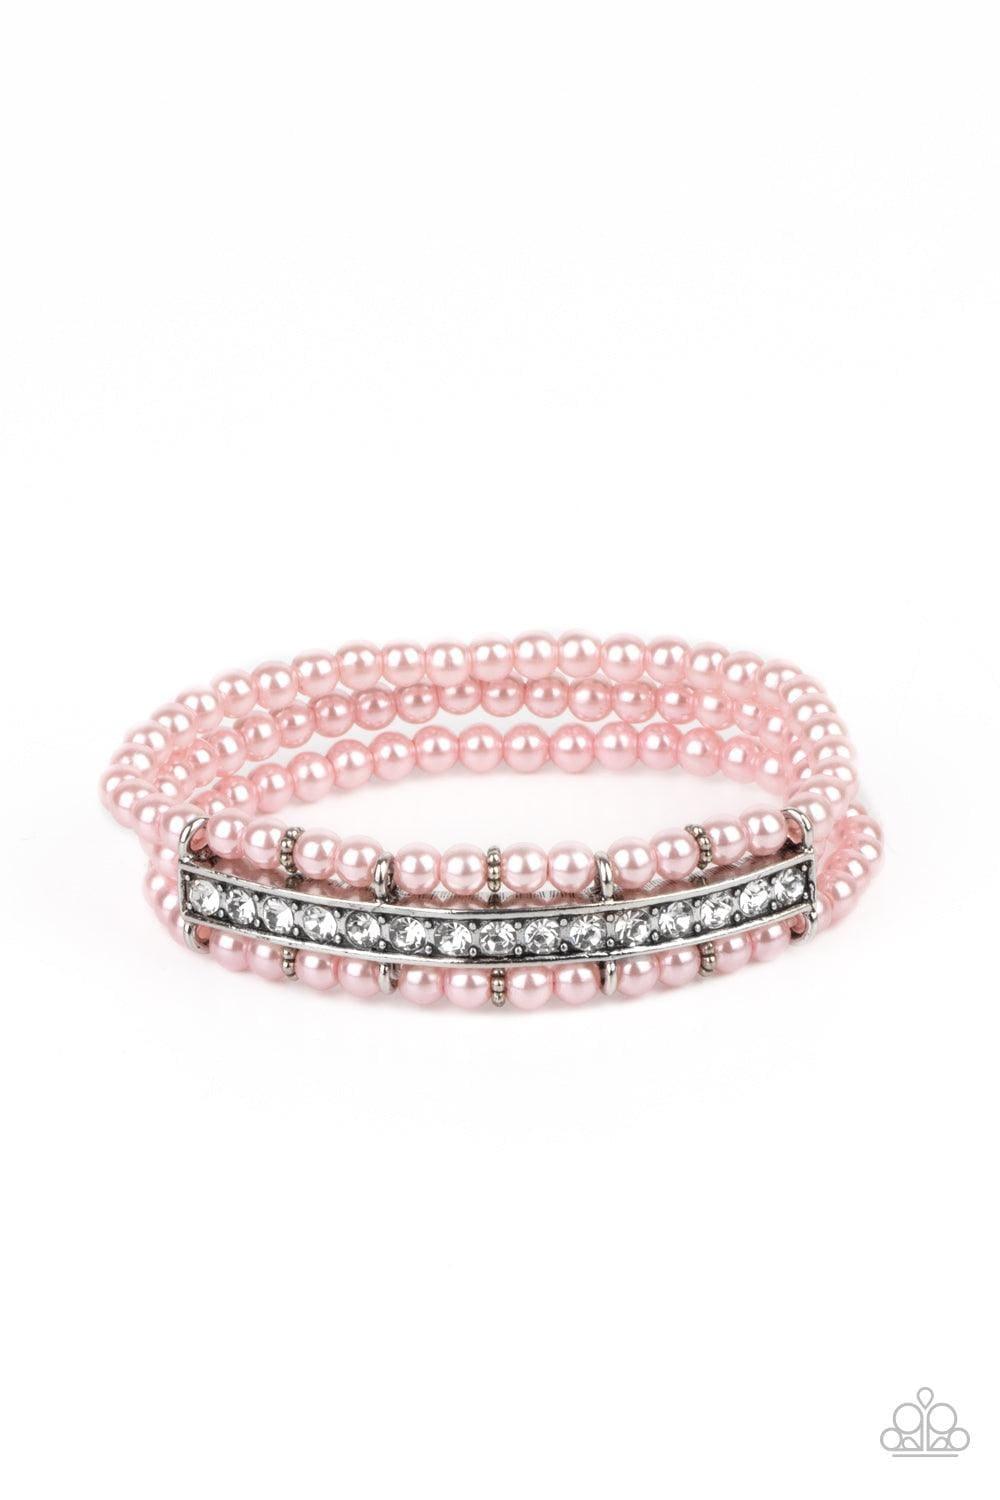 Paparazzi Accessories - Vintage Beam - Pink Bracelet - Bling by JessieK